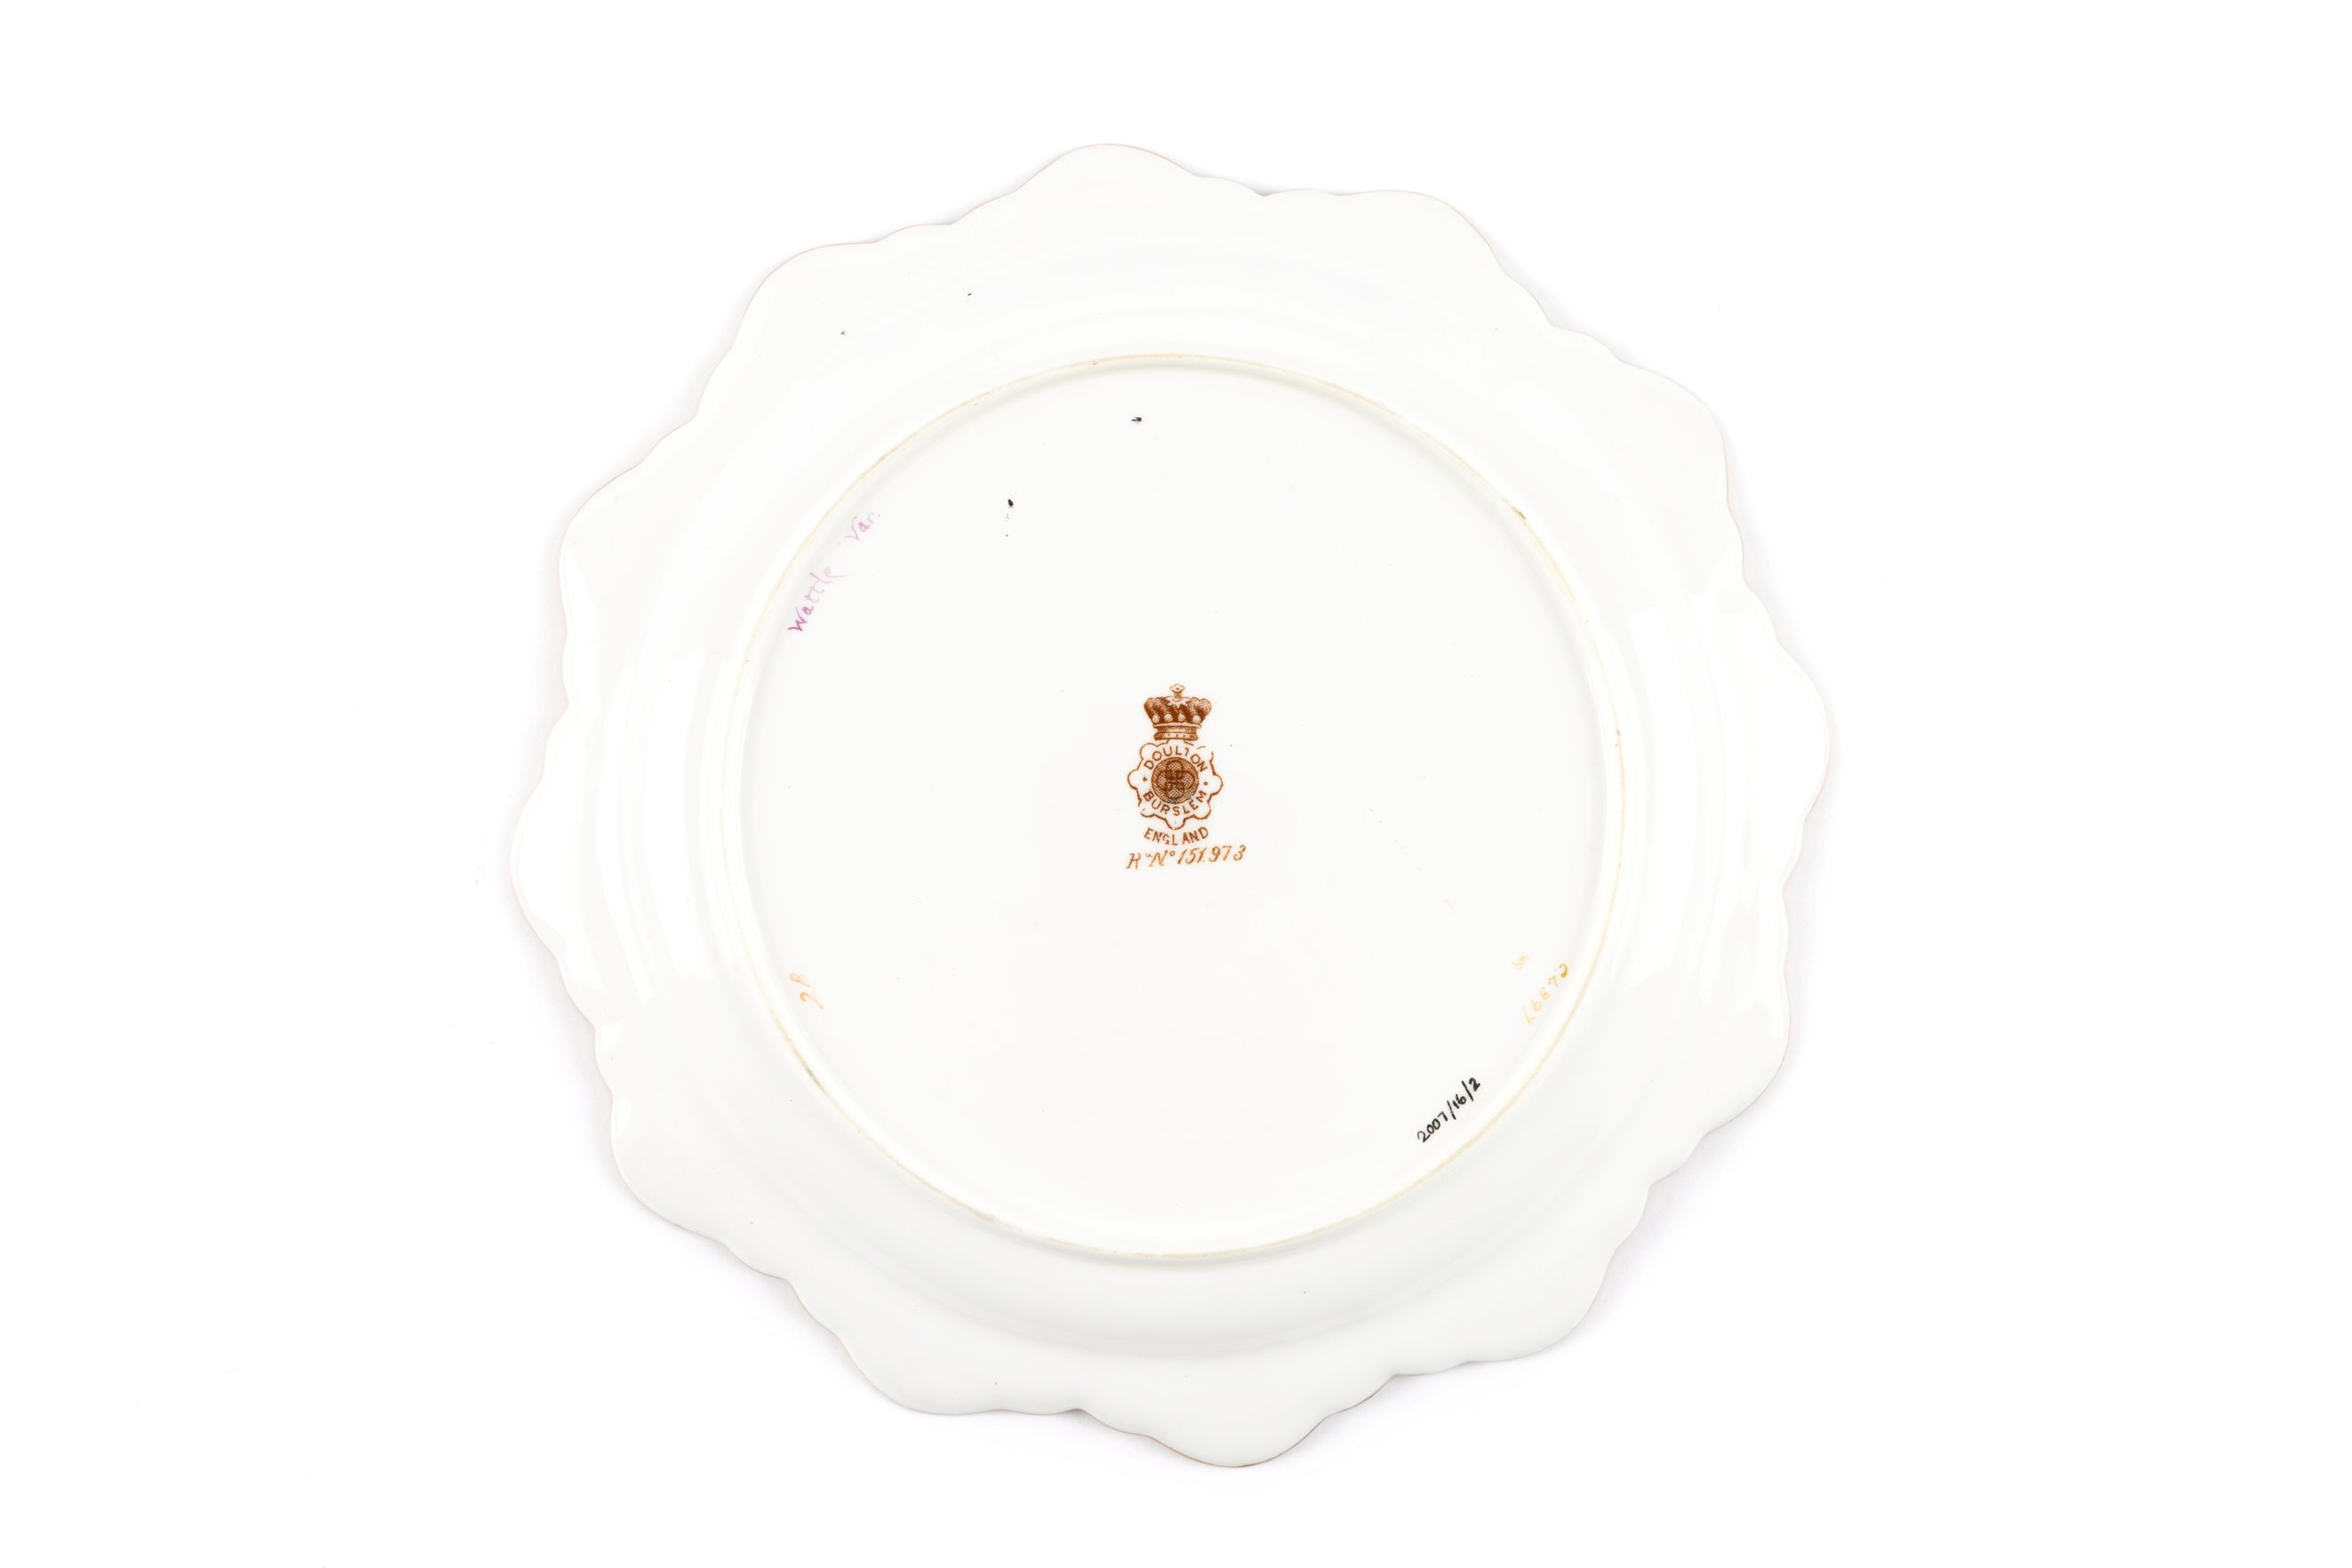 Doulton porcelain (bone china) plate painted by Louis Bilton with Australian wattle